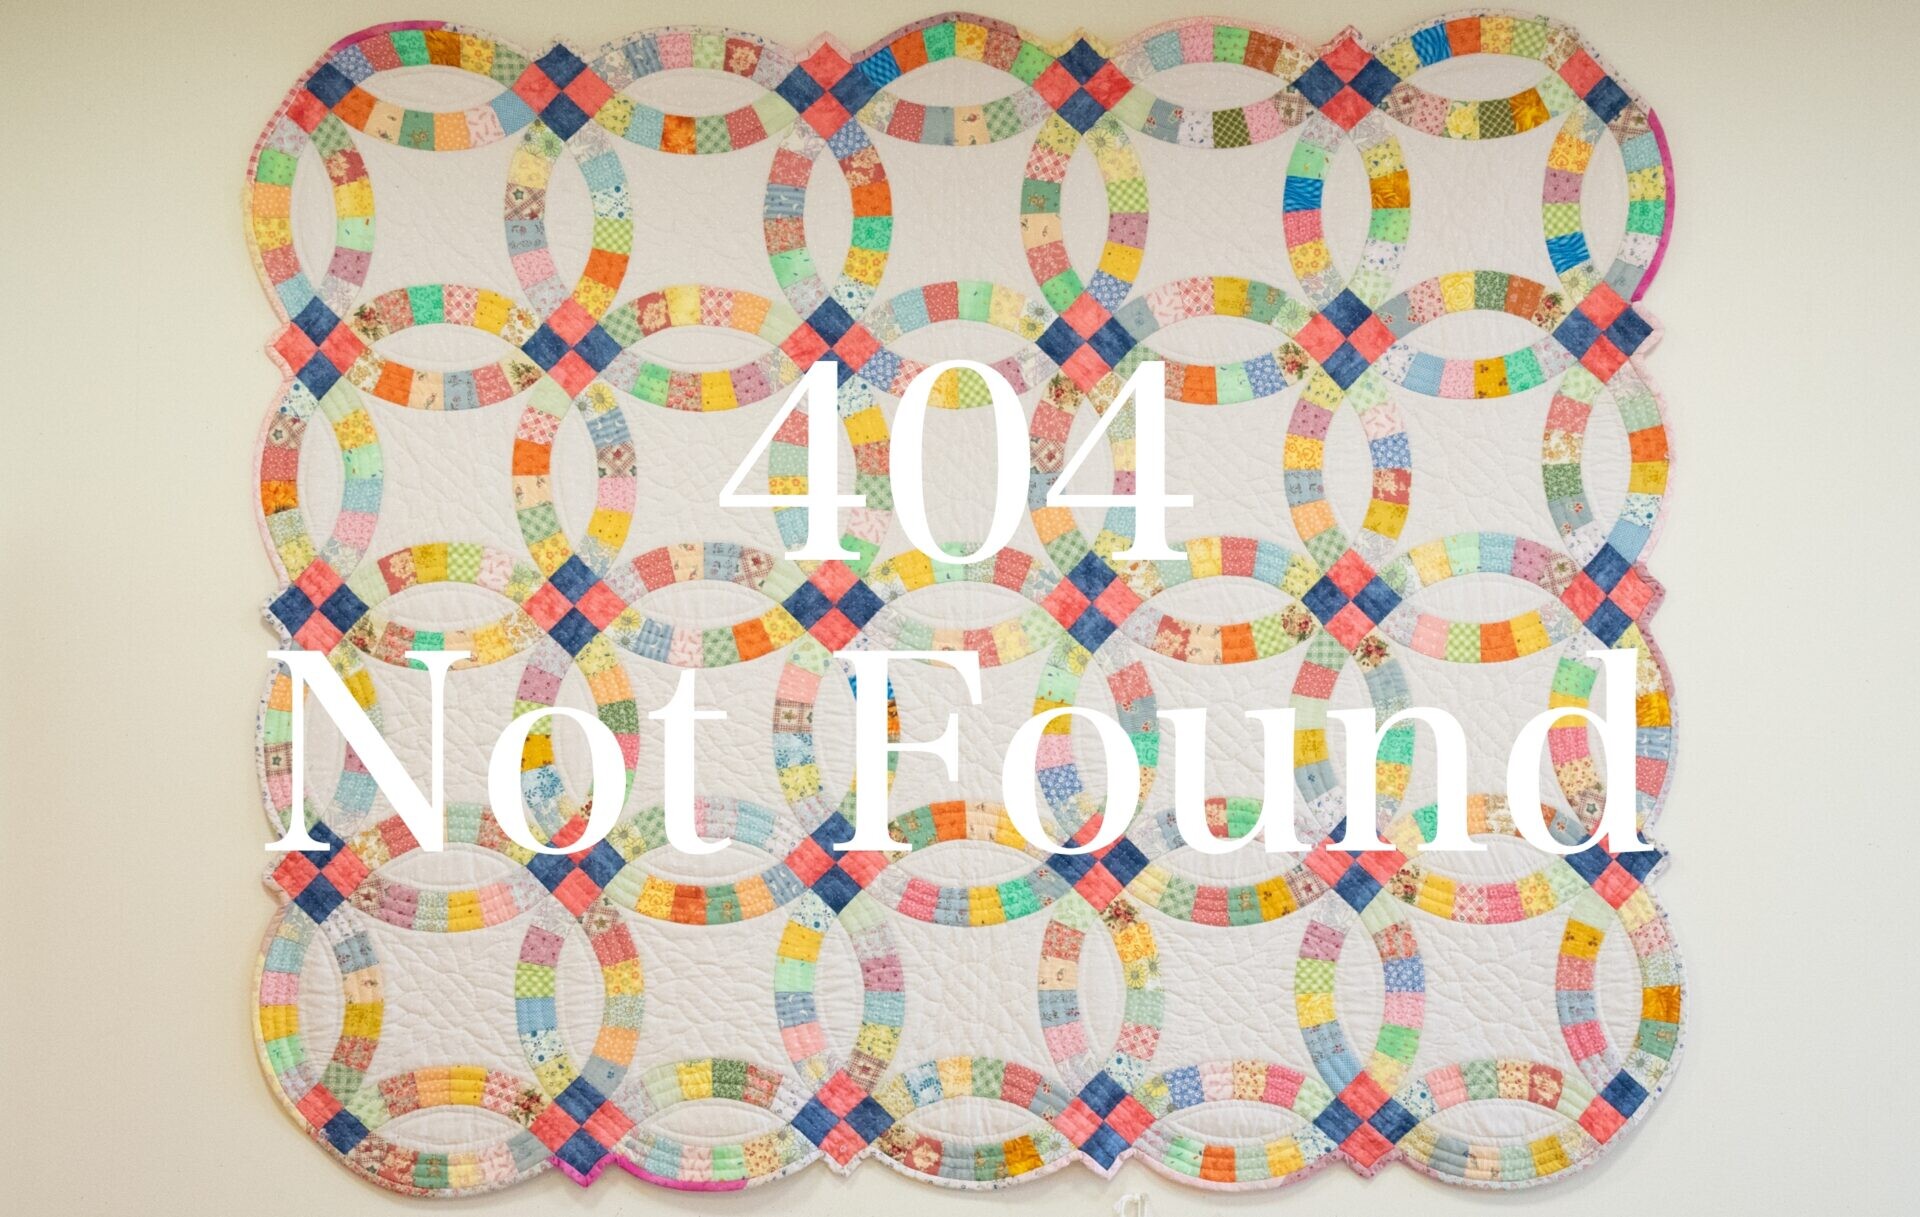 404 Not Found
お探しのページは見つかりませんでした